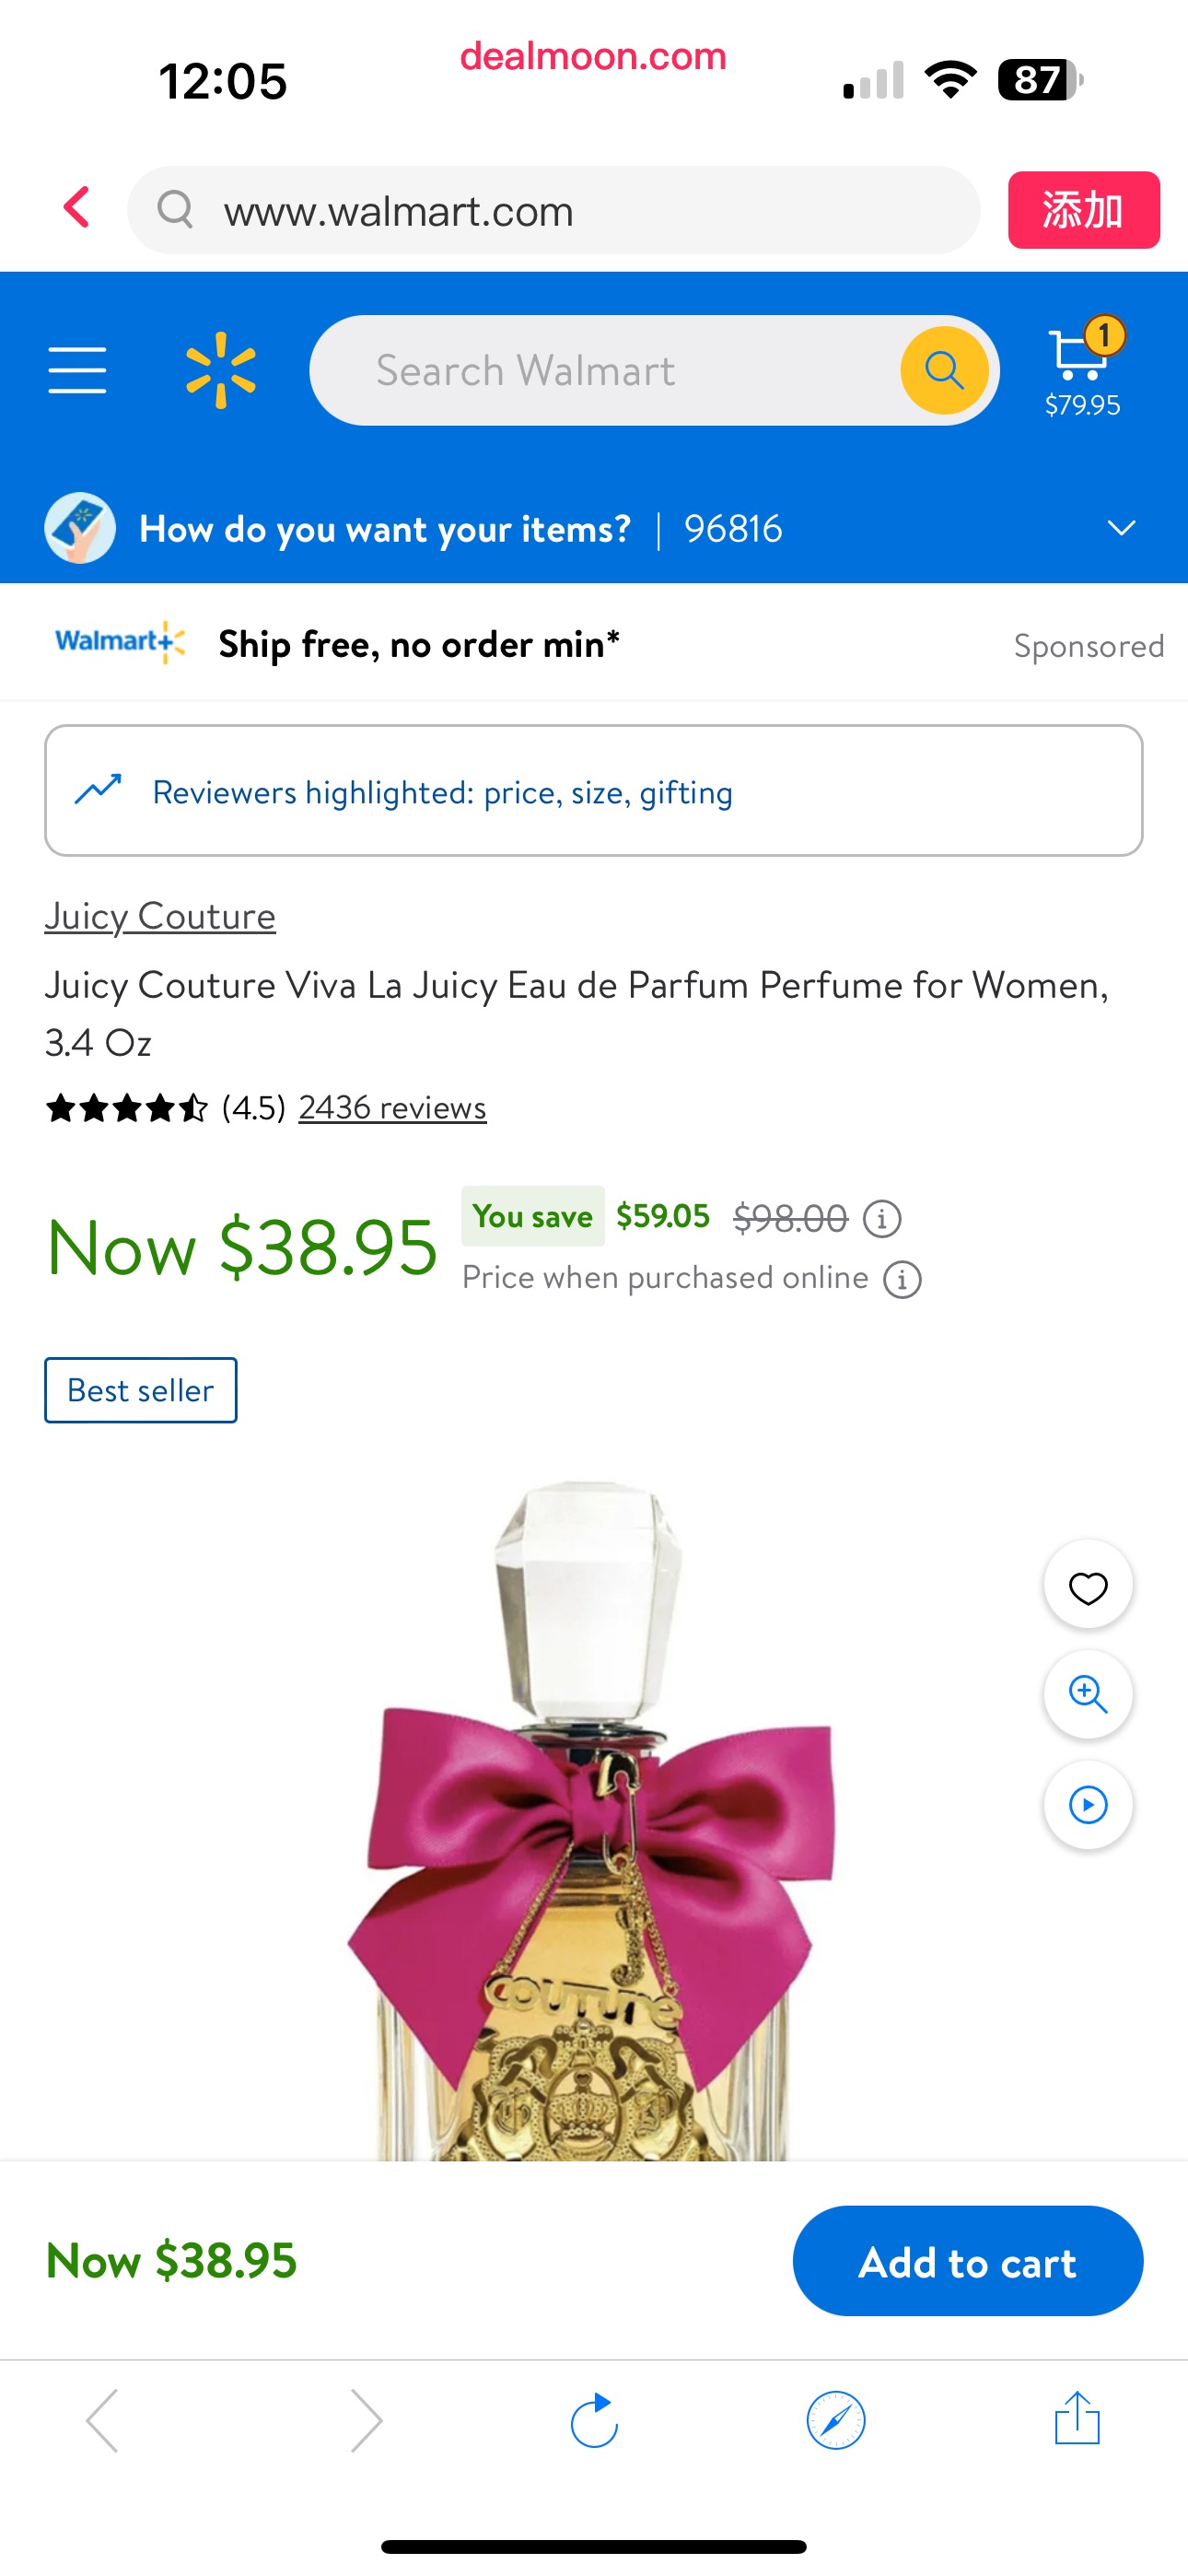 Juicy Couture Viva La Juicy Eau de Parfum Perfume for Women, 3.4 Oz - Walmart.com香水